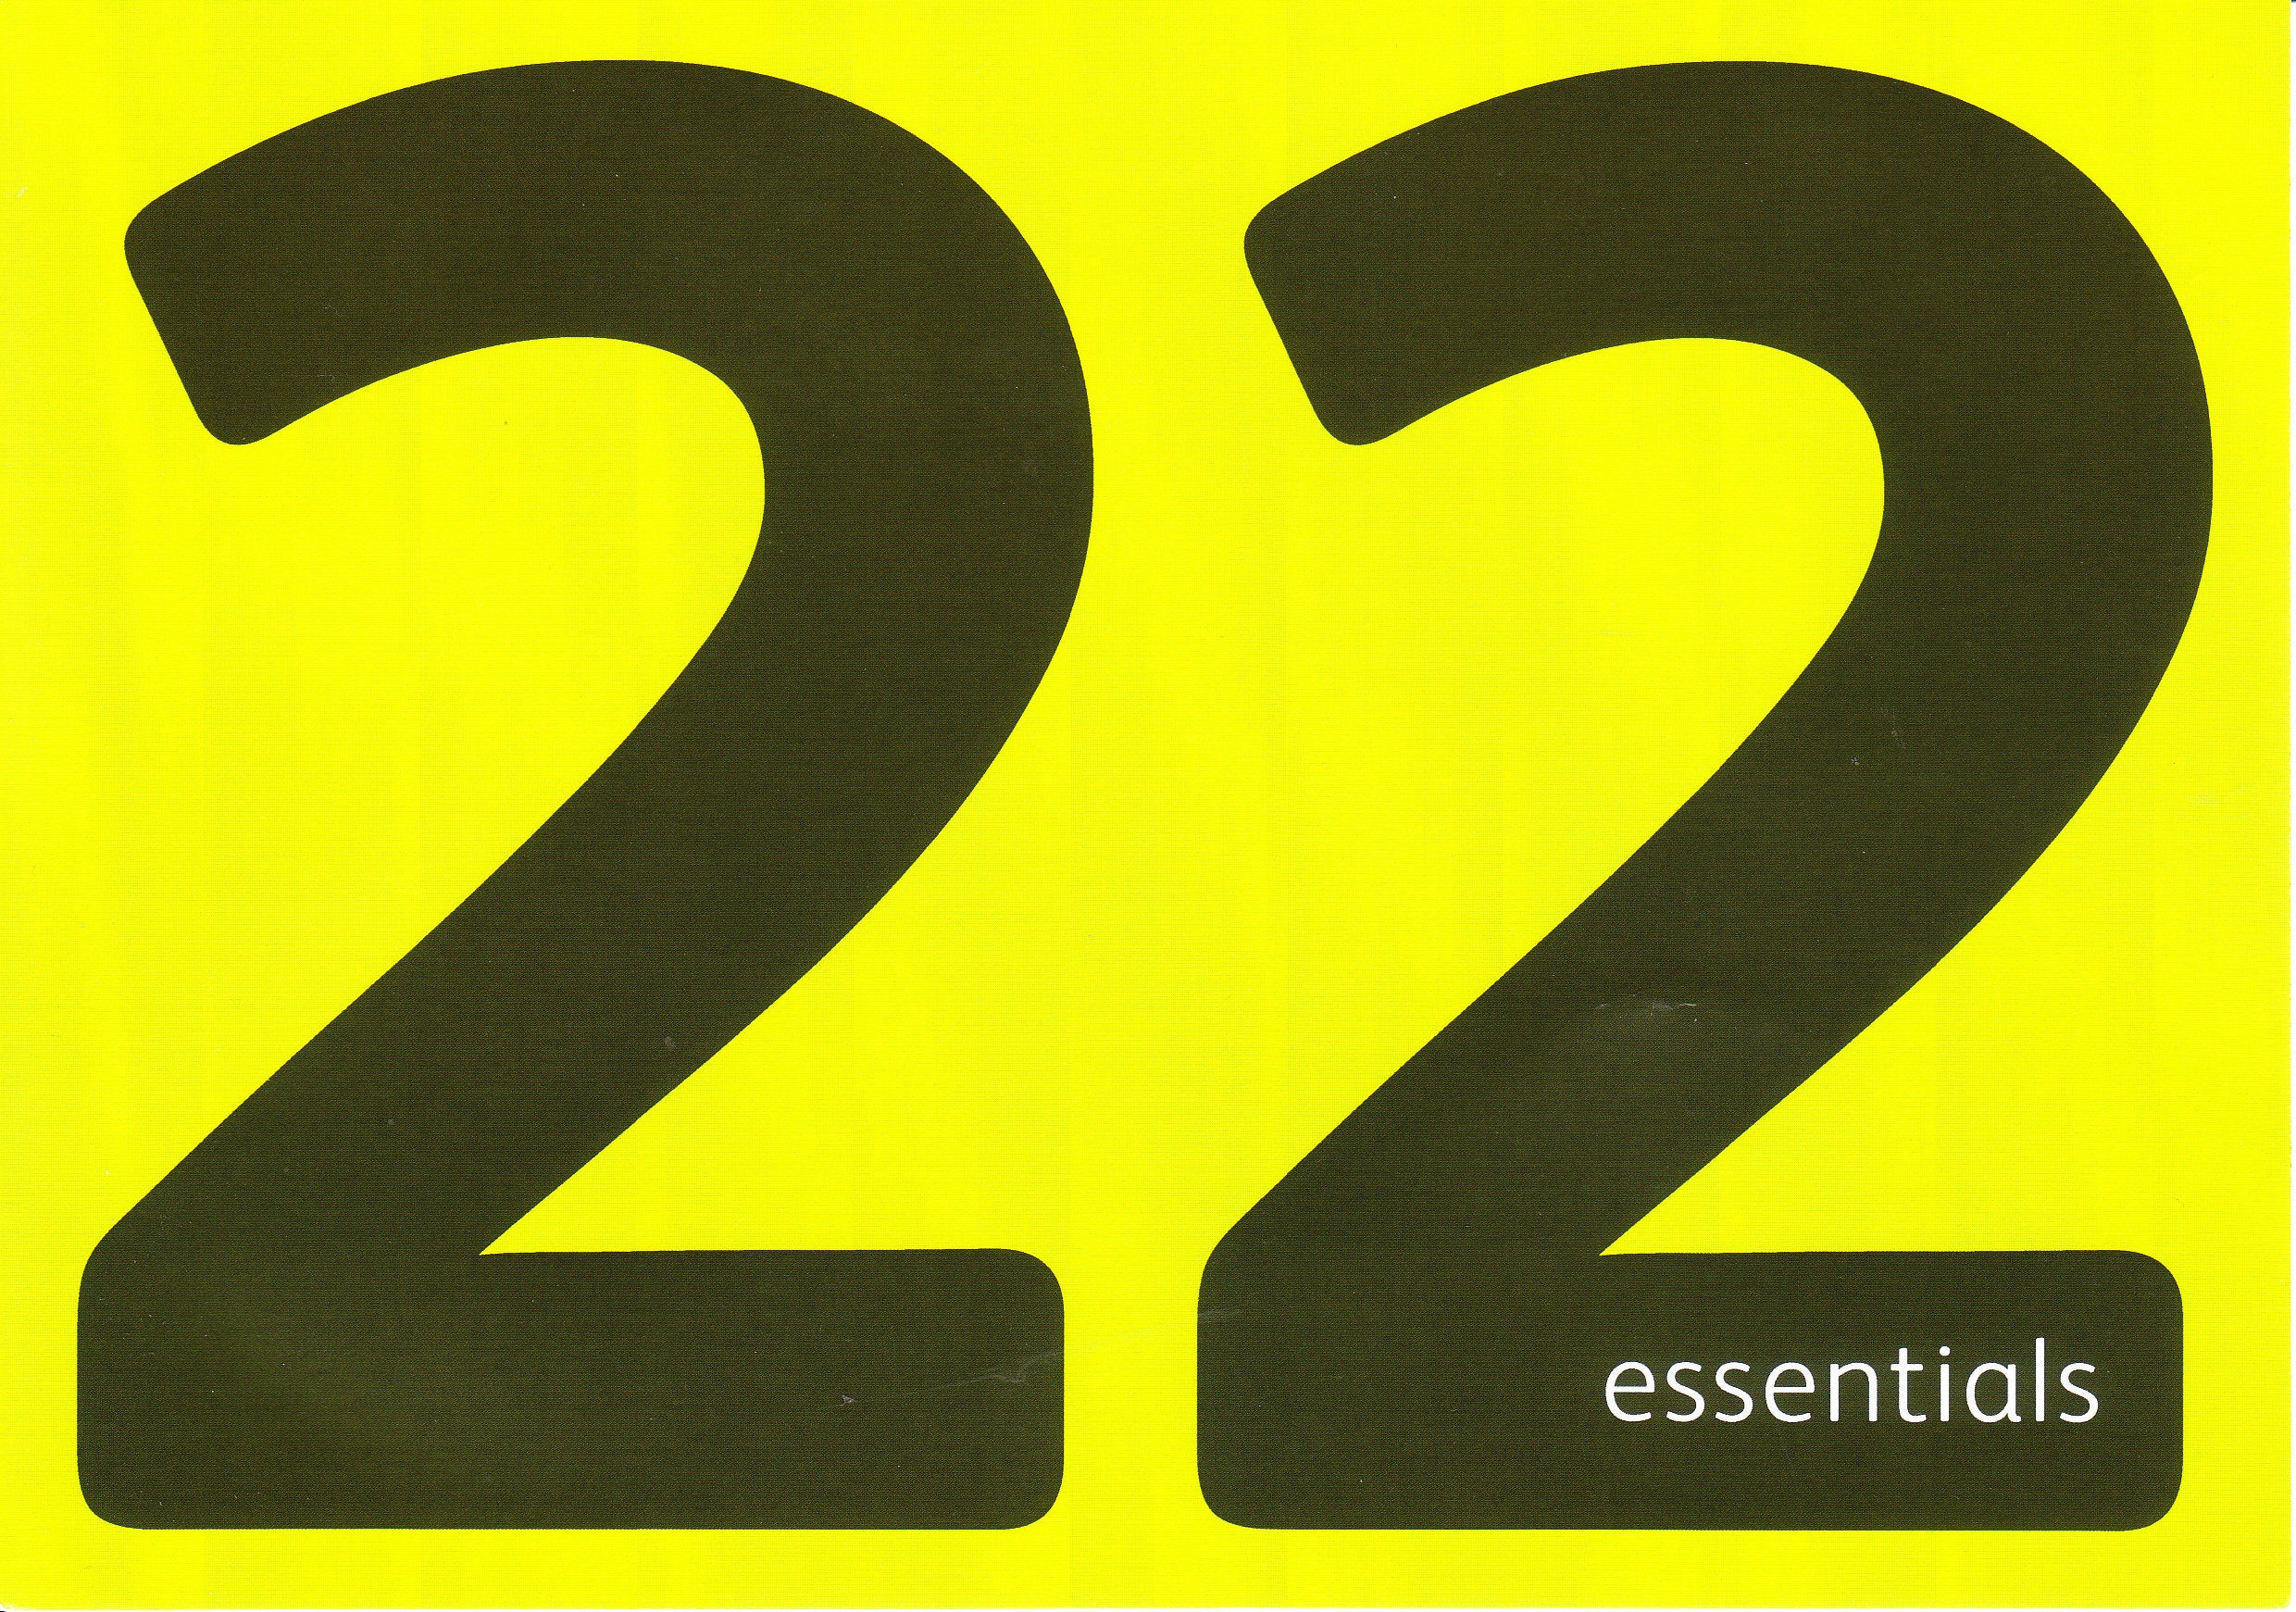 22 Essentials from Nicholas Bate image